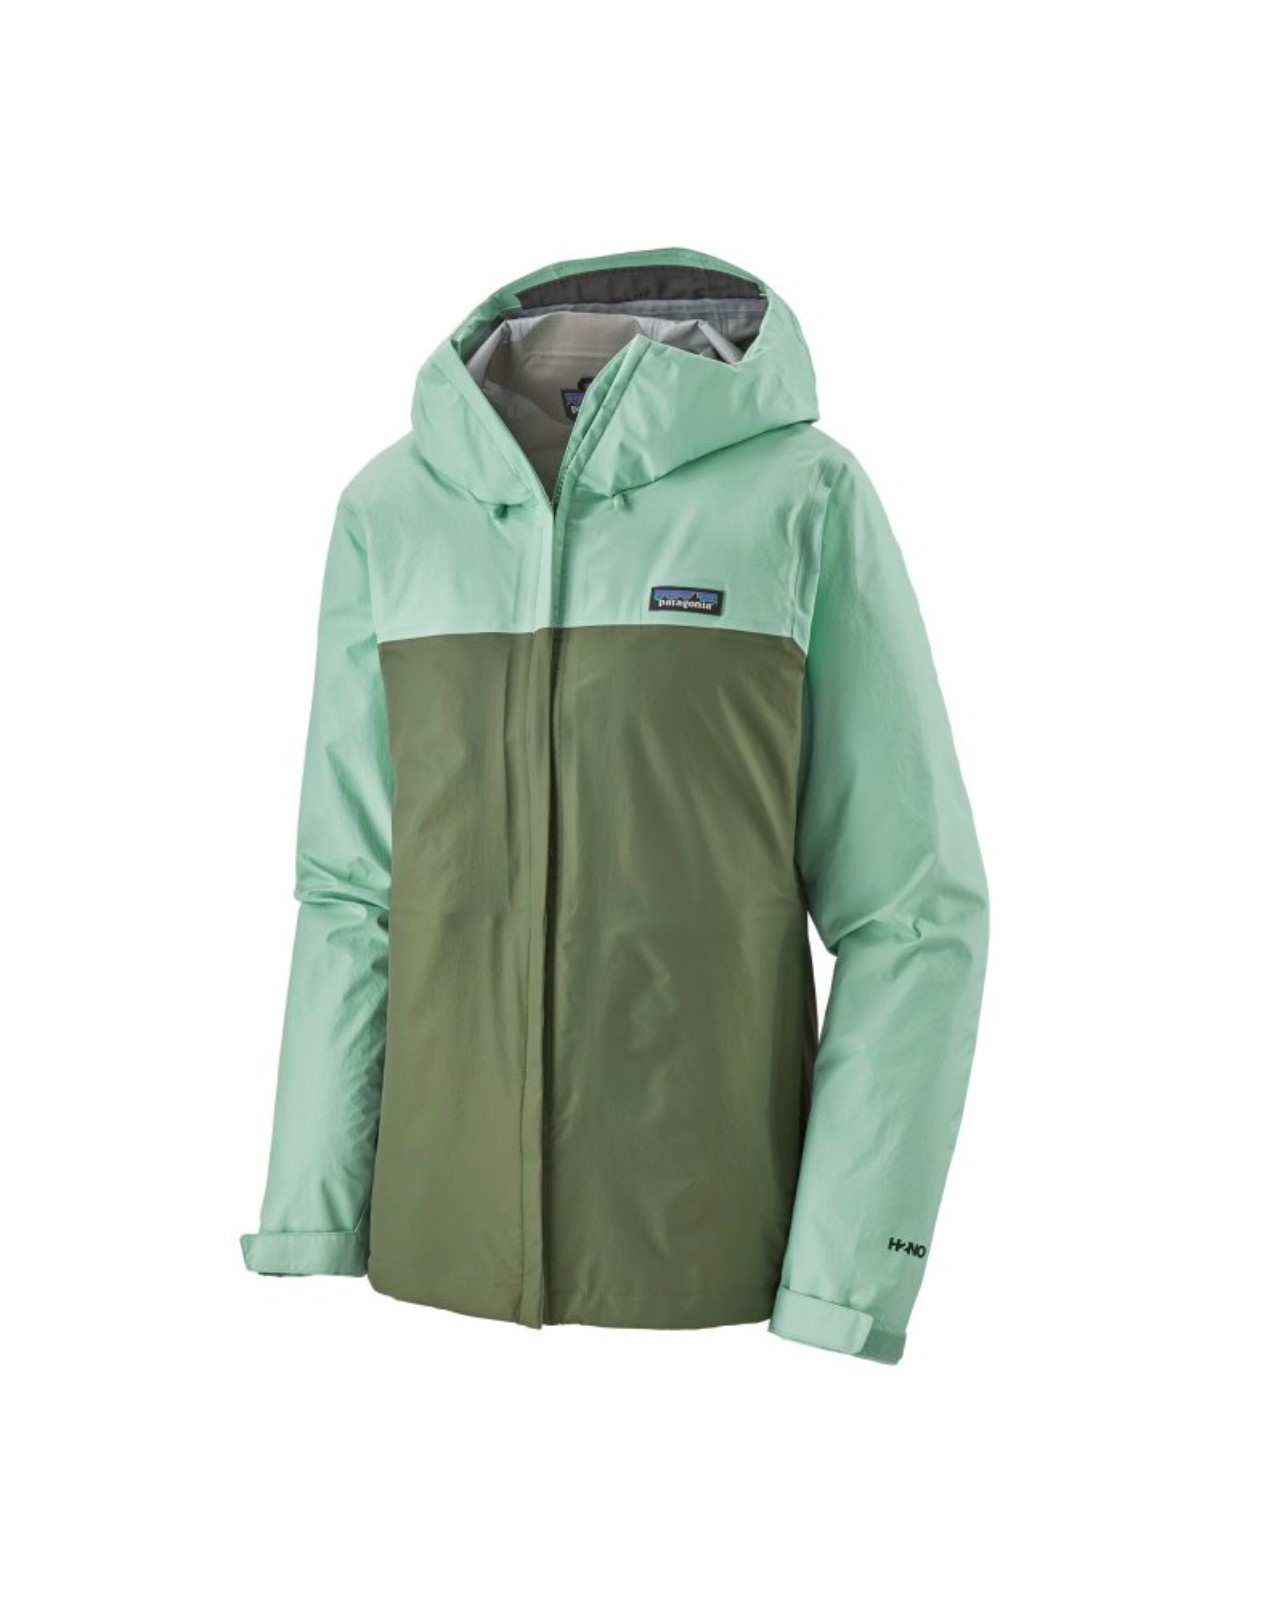 Patagonia W's Torrentshell 3L Jacket - Gypsum Green - Large